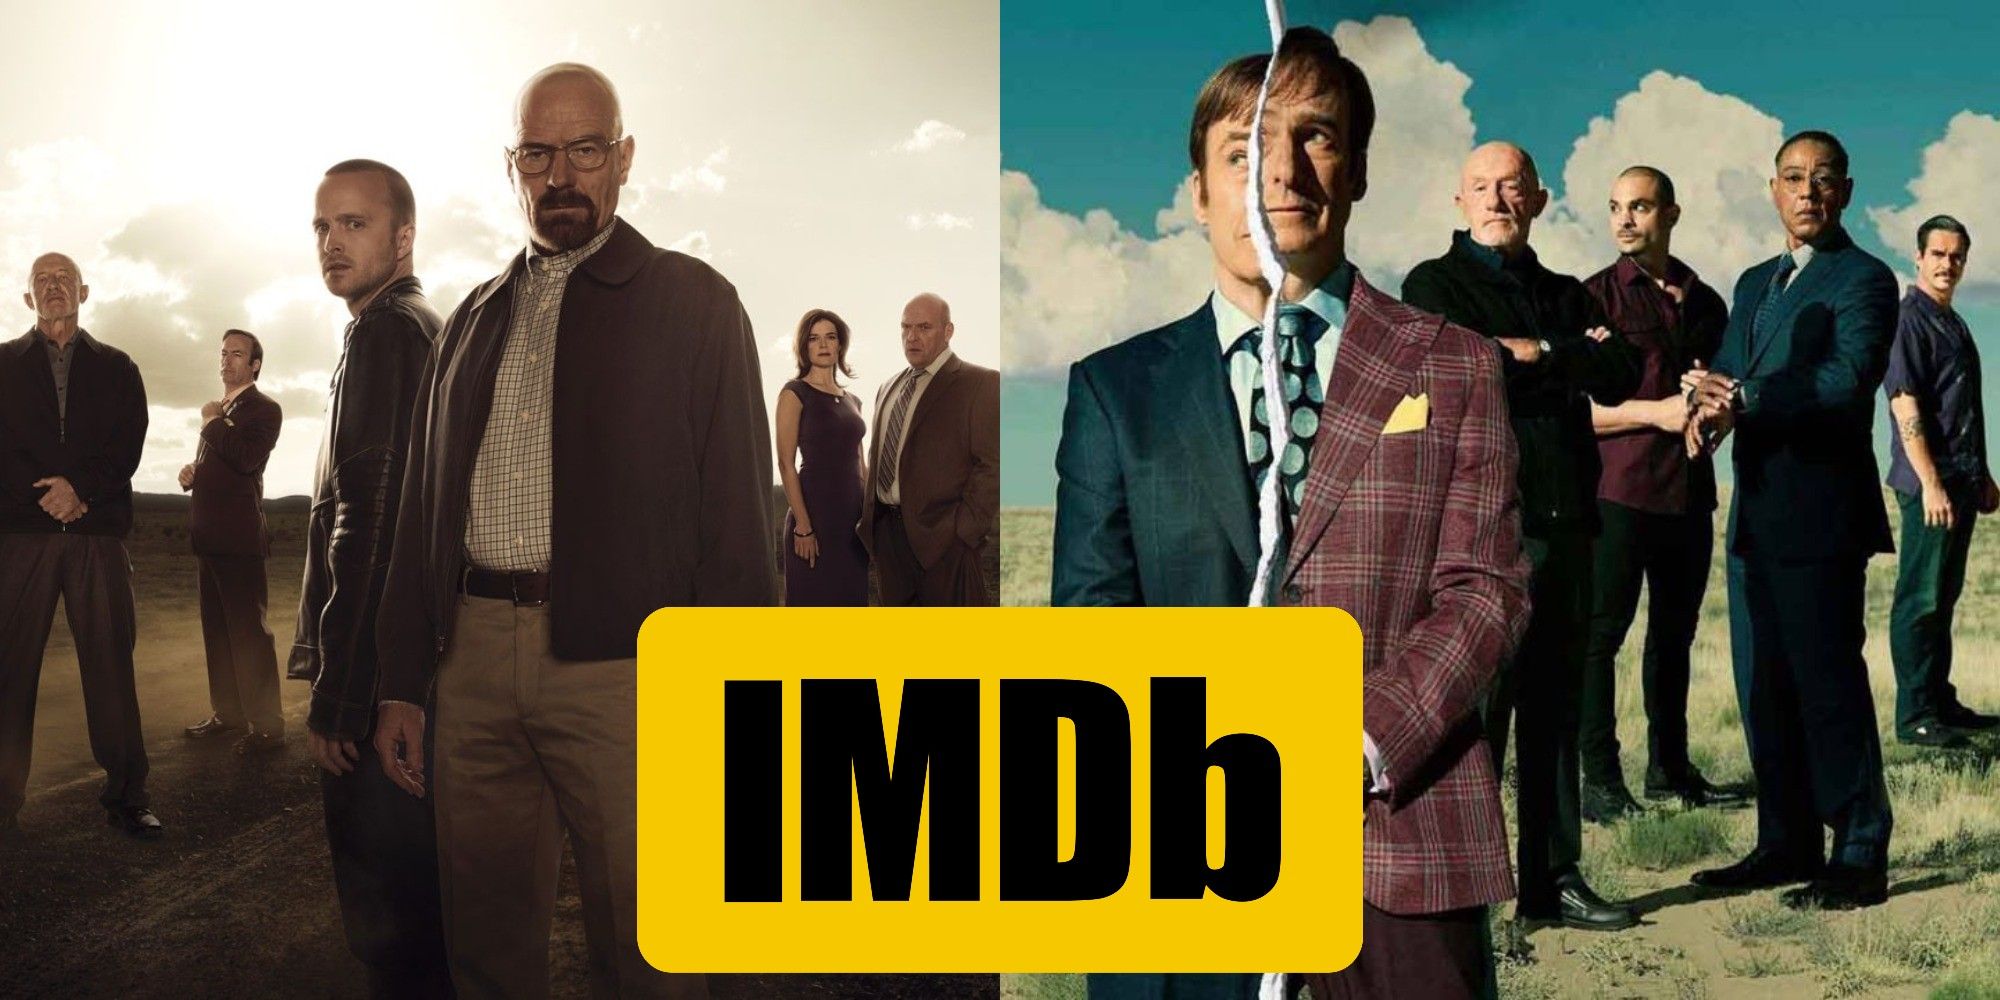 Every Season Of Better Call Saul & Breaking Bad, Ranked (According To IMDb)